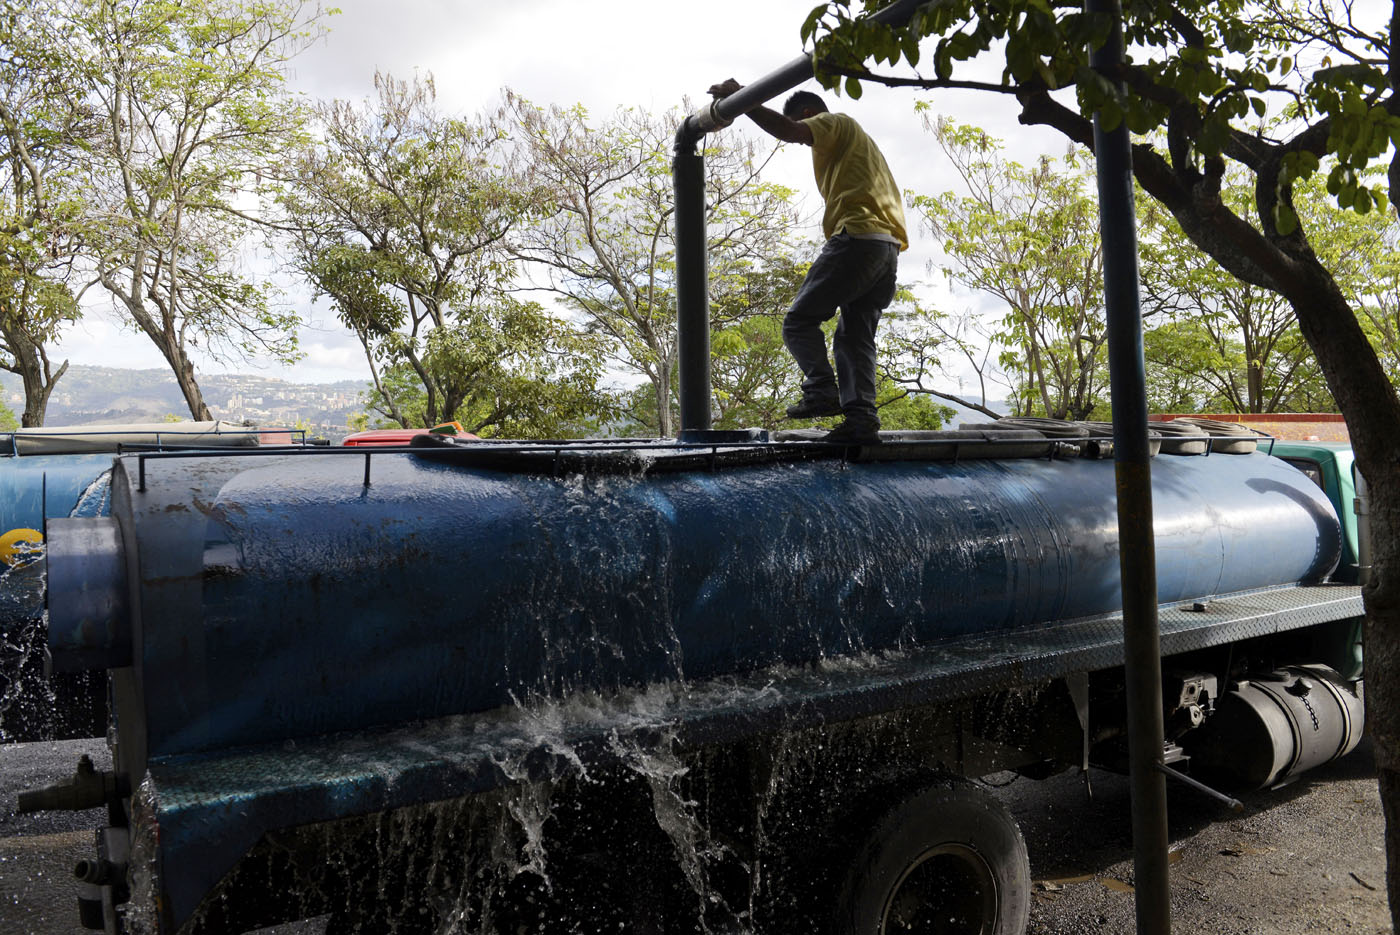 Decretan emergencia en el estado Falcón por falta de agua potable